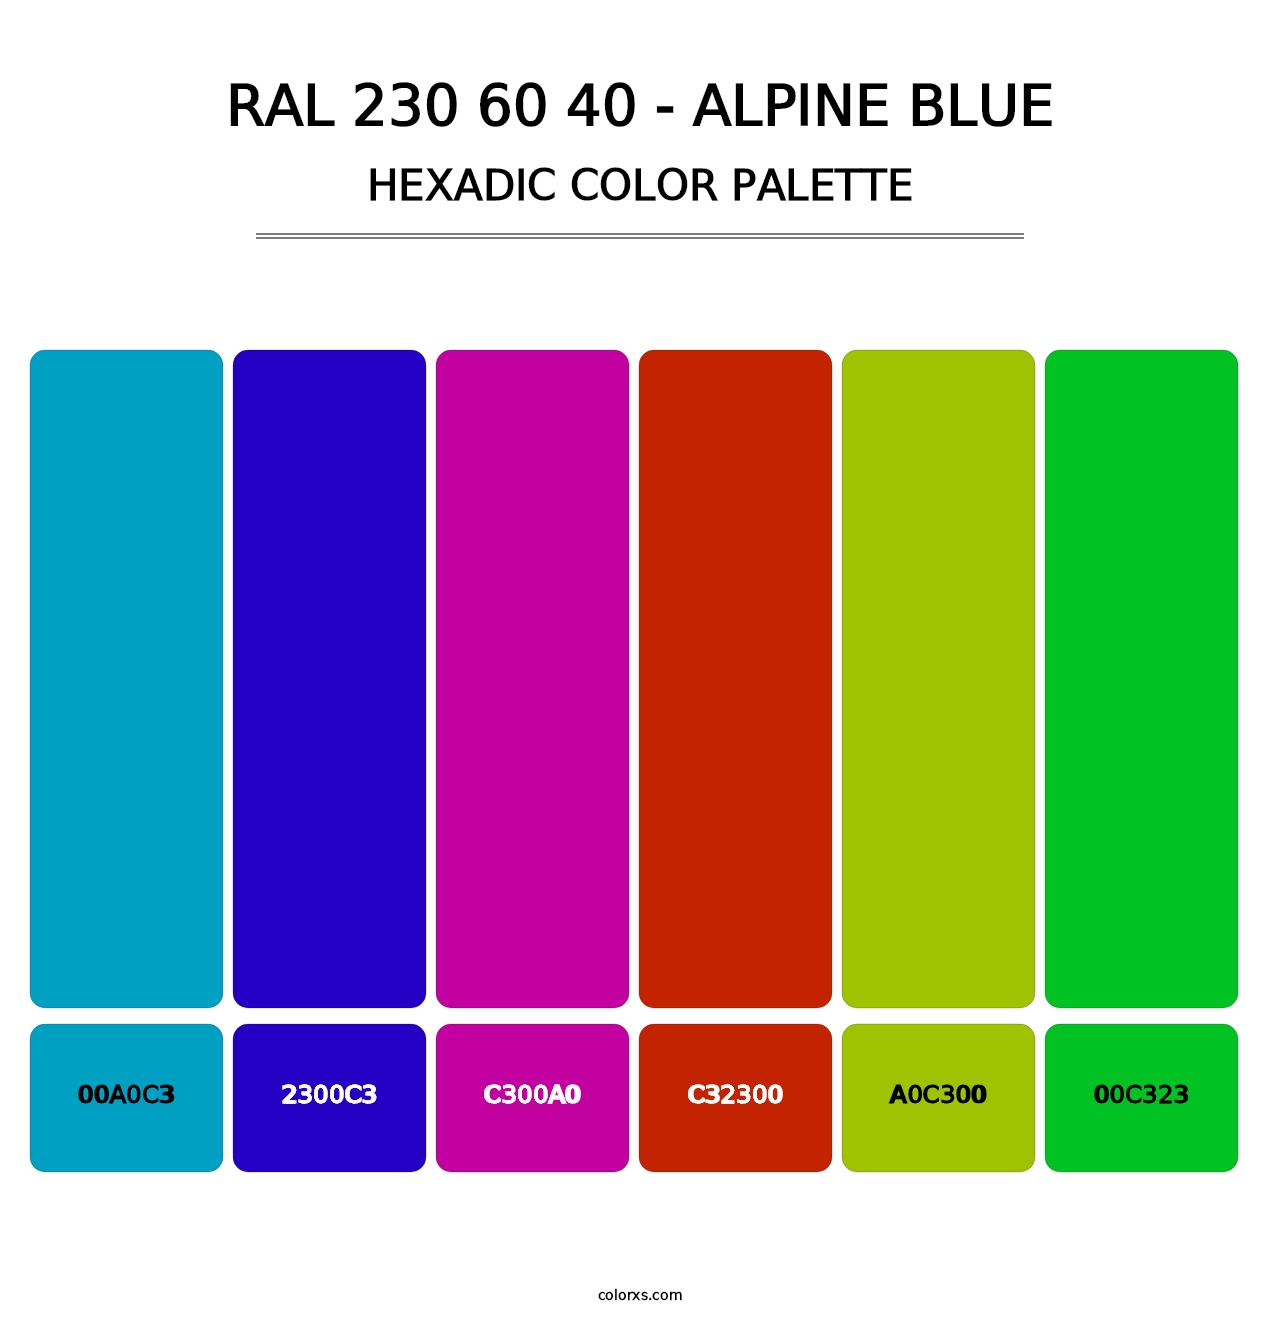 RAL 230 60 40 - Alpine Blue - Hexadic Color Palette